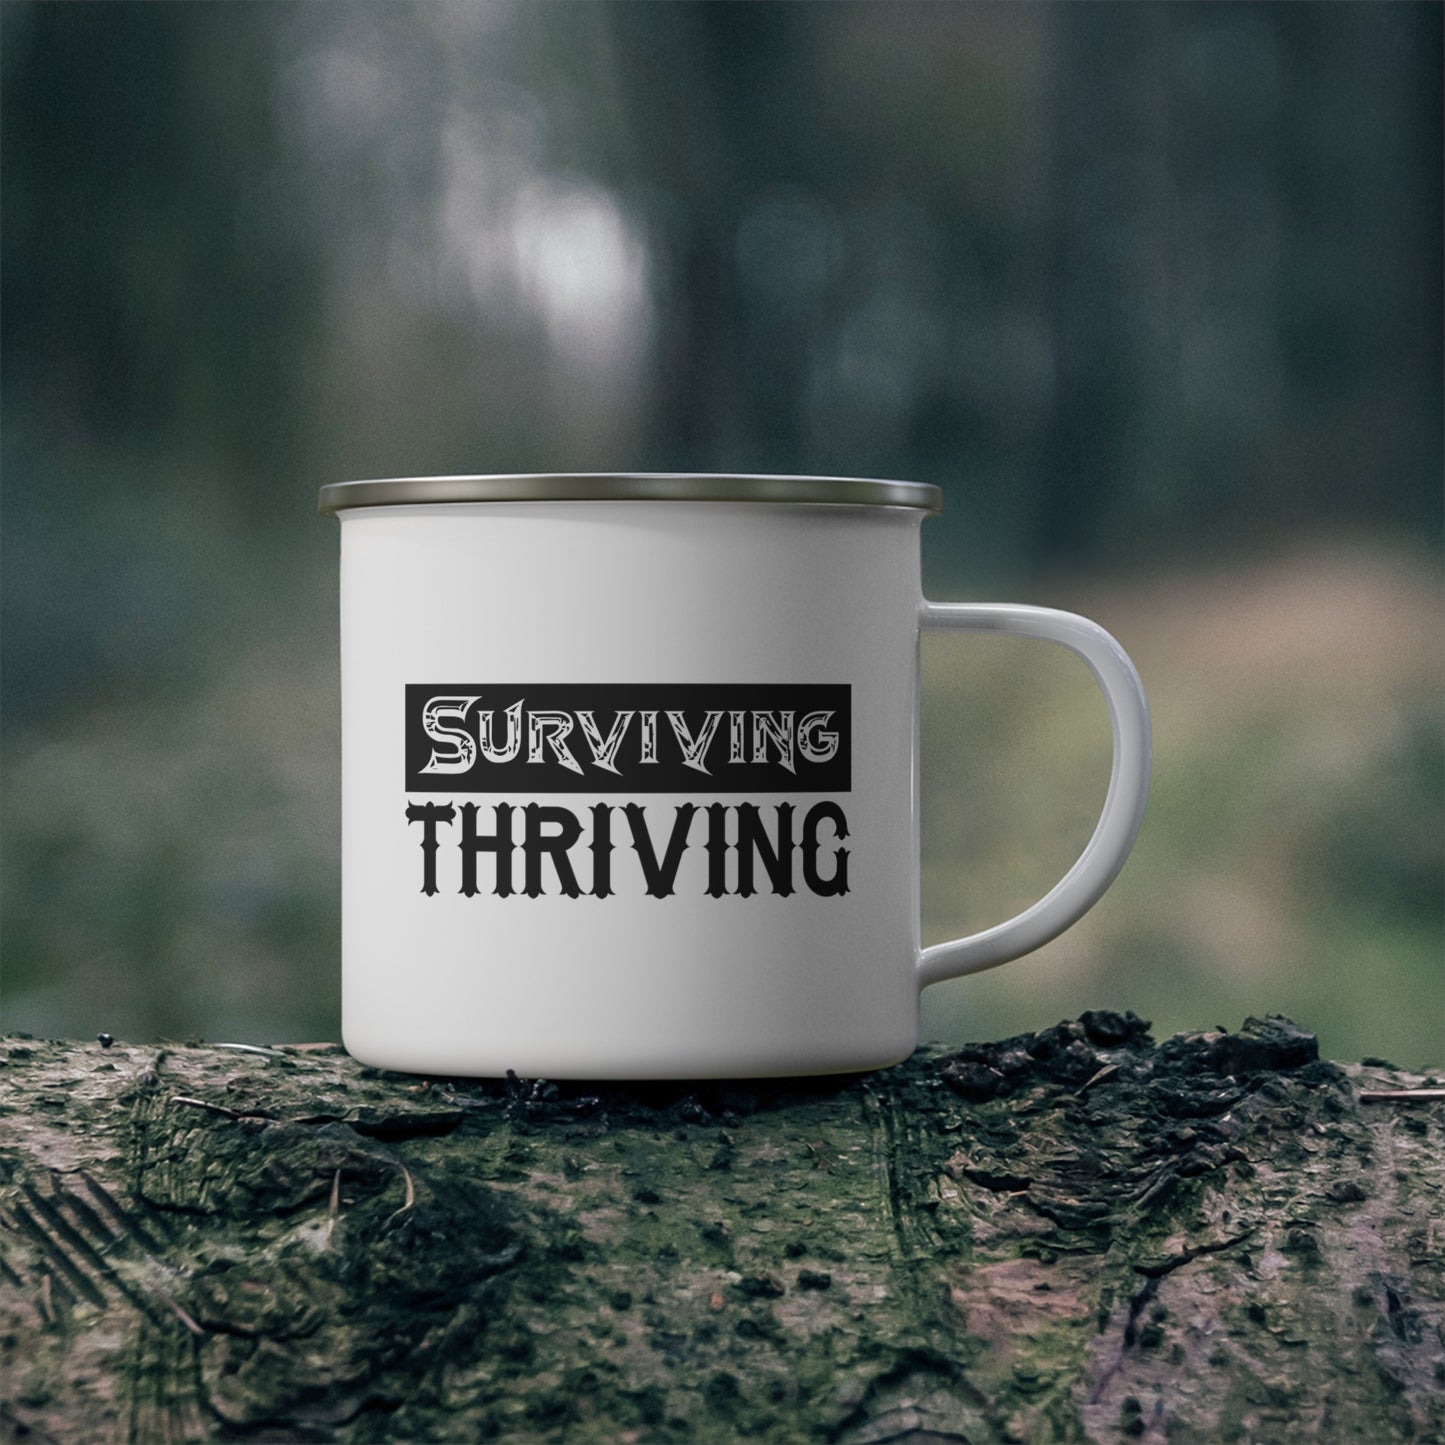 Niccie's Surviving Thriving - Enamel Camping/Travel Mug